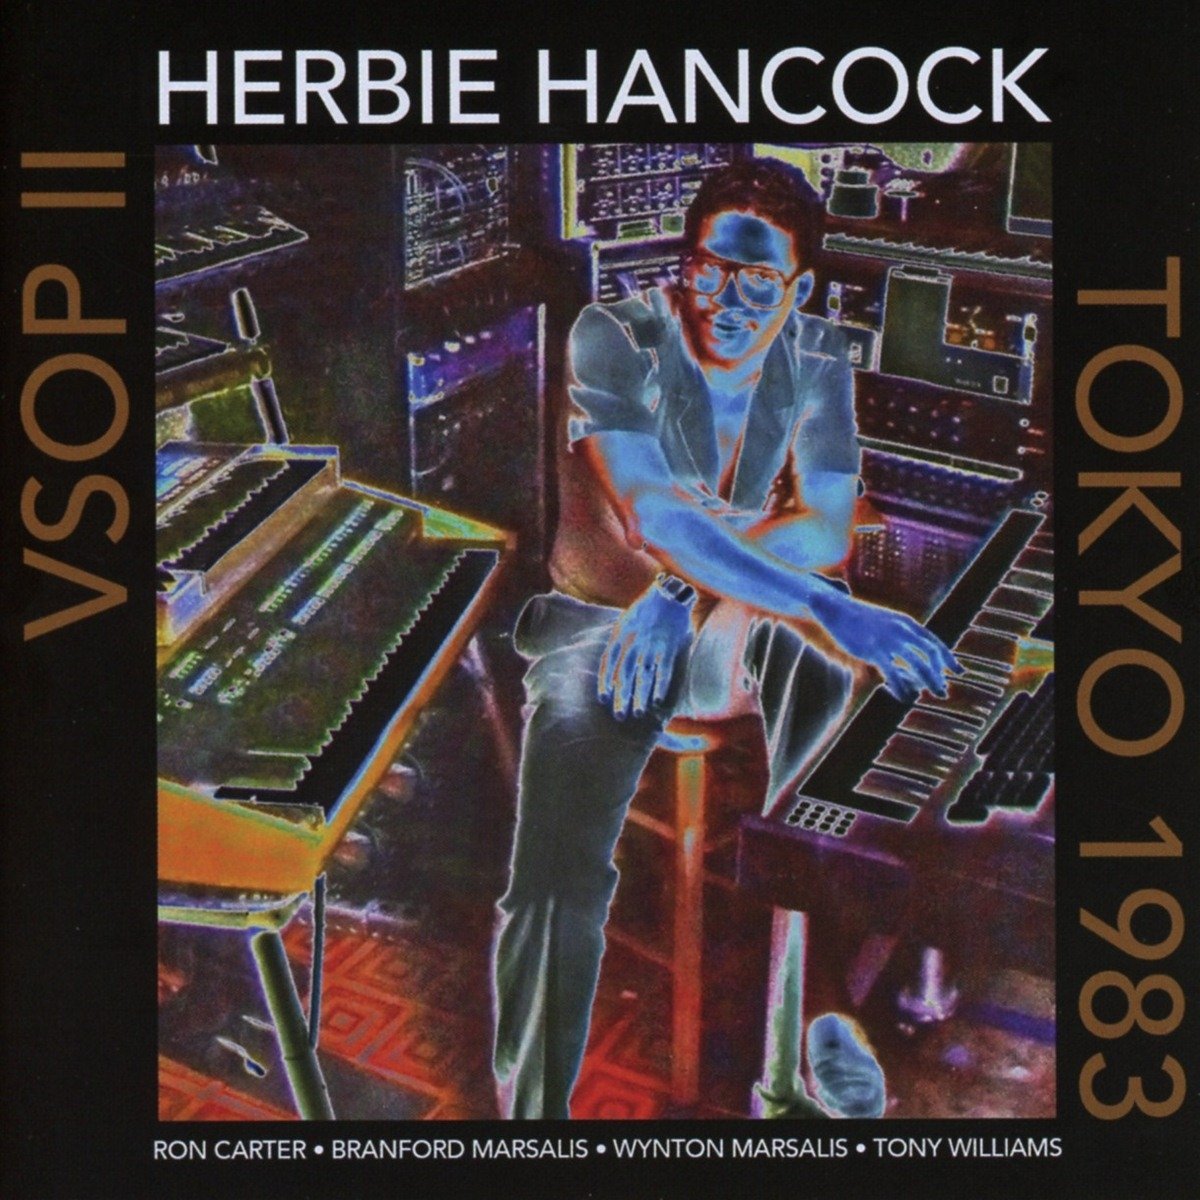 HERBIE HANCOCK - VSOP II - Tokyo 1983 cover 